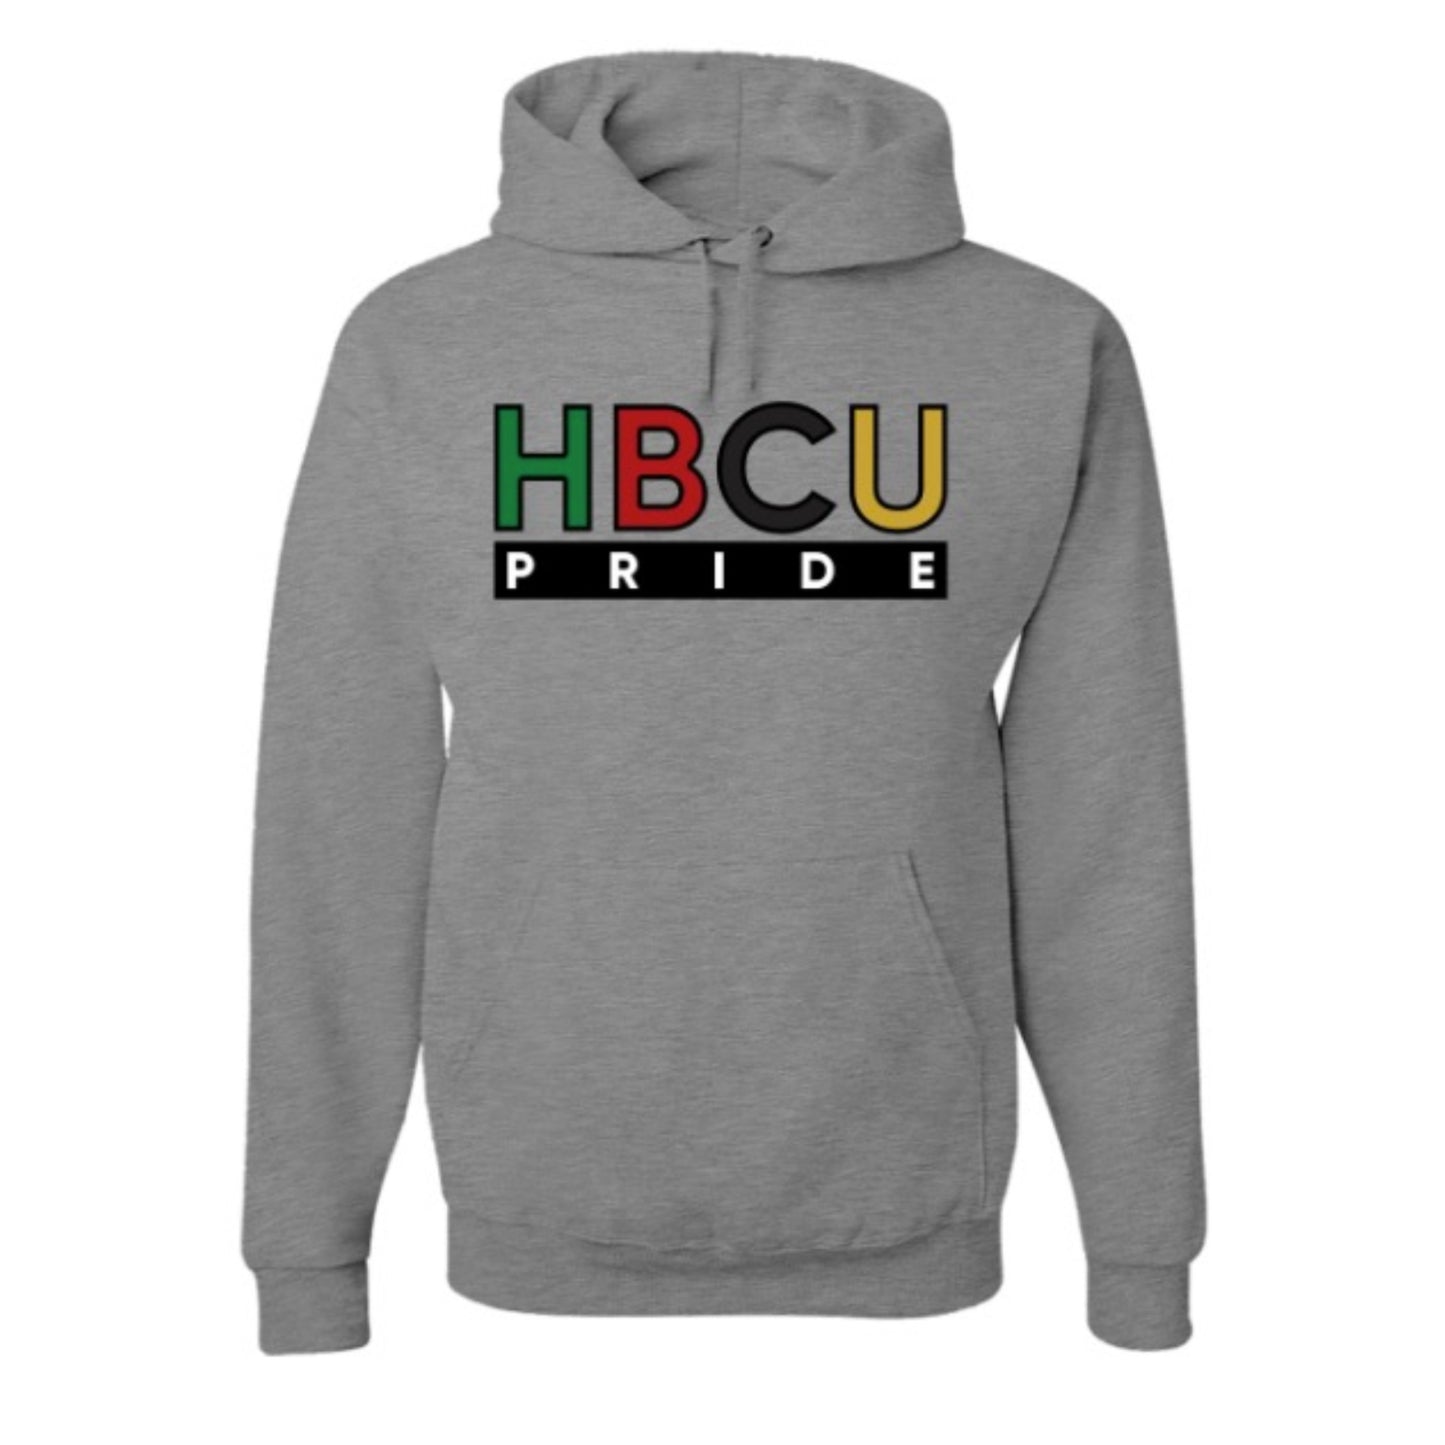 HBCU Pride Hoodie/Crew in Heather Grey